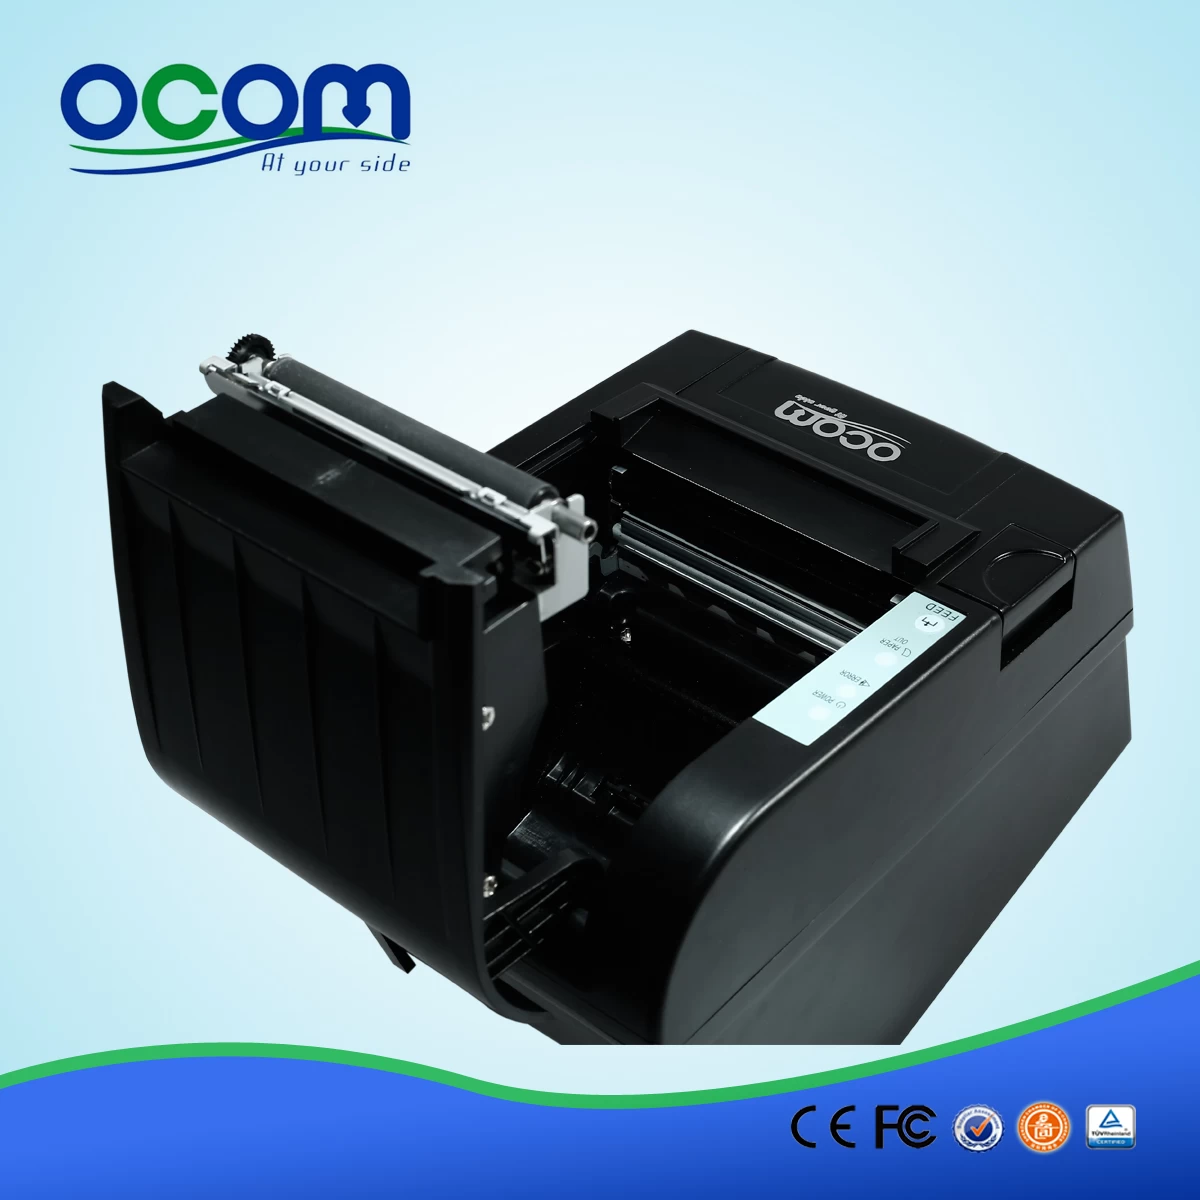 Classical 80mm  Wifi Thermal Receipt Printer OCPP-806-W